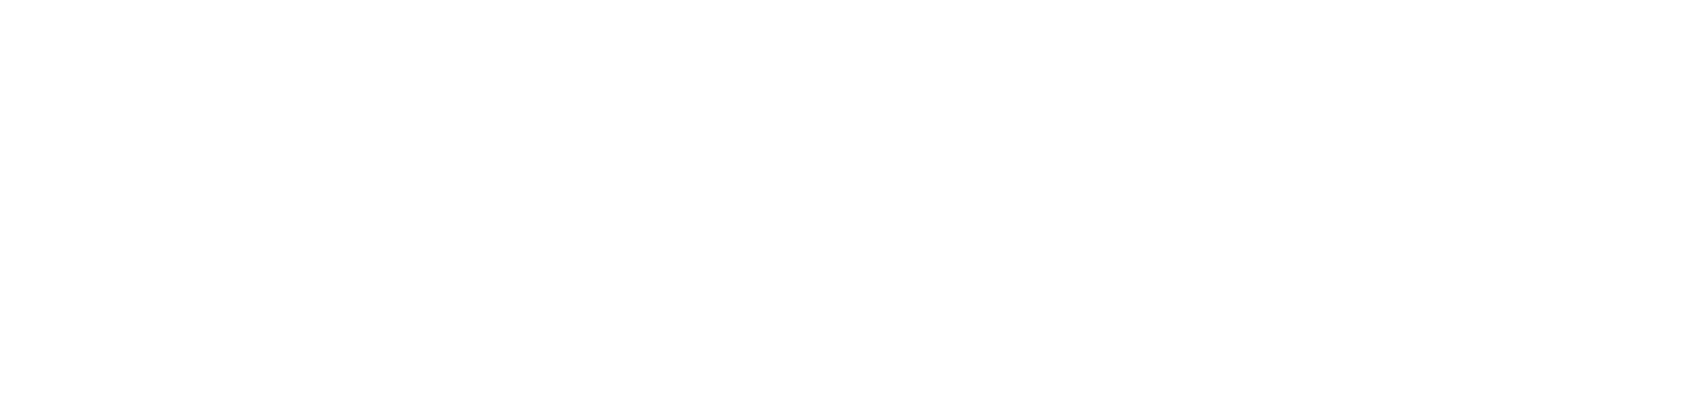 Jornal da Unicamp